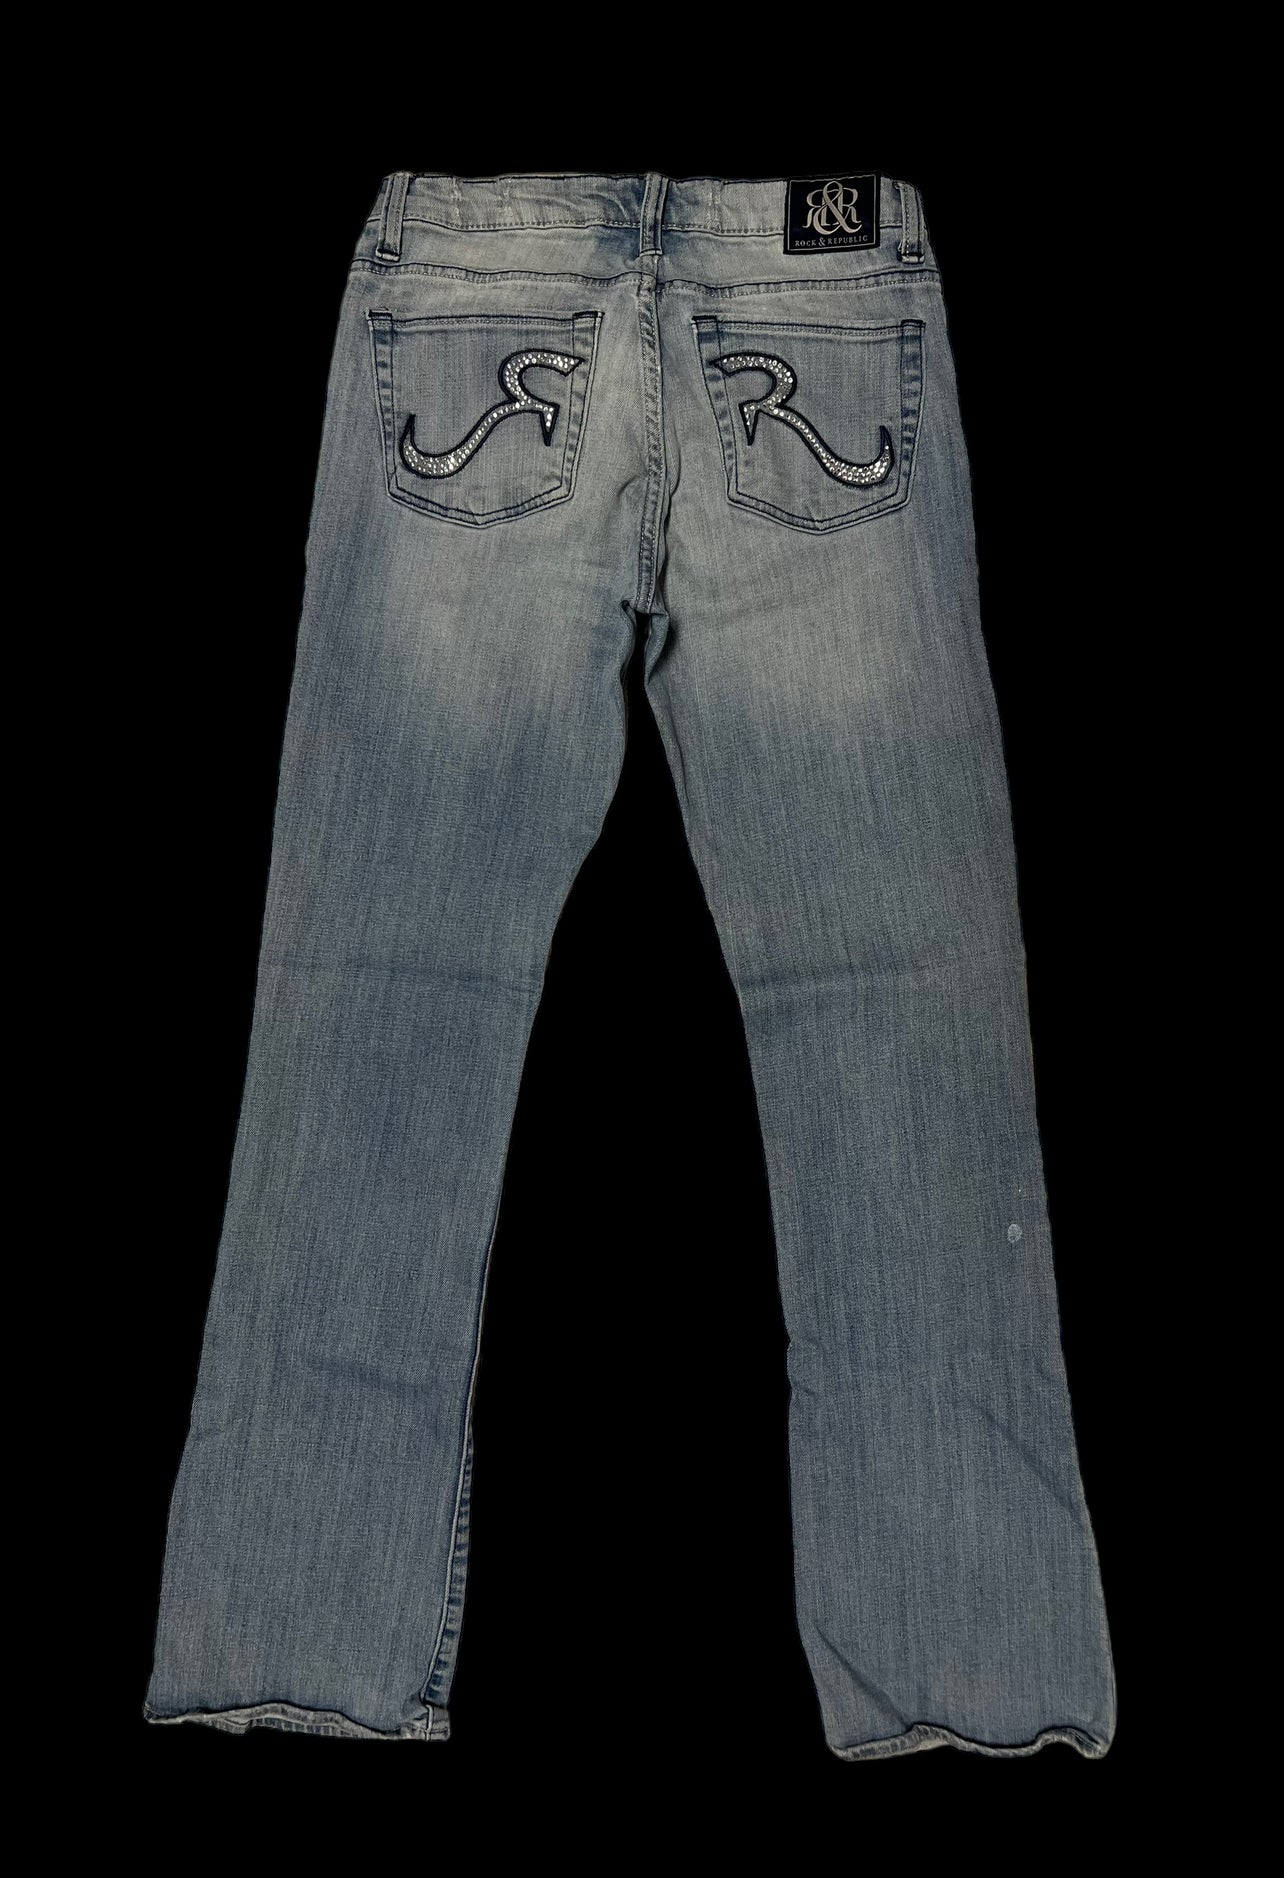 Rock & Republic jeans